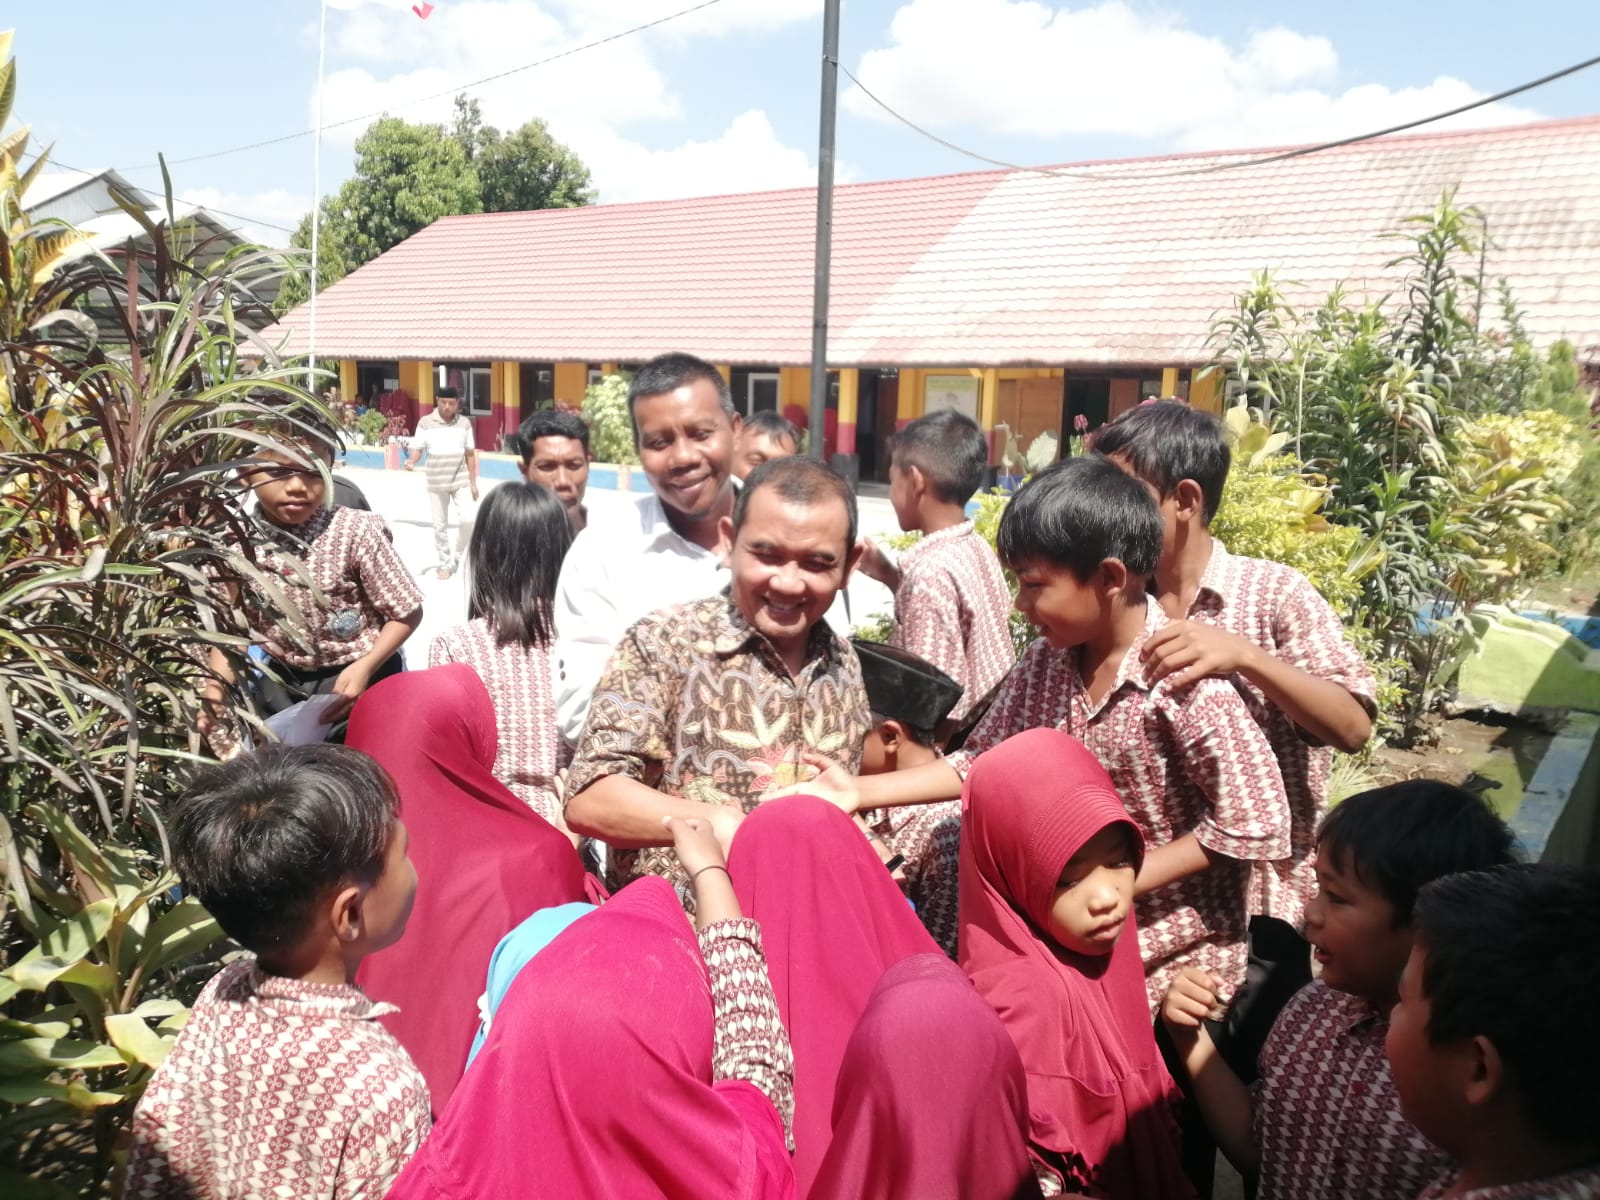 Waka 1 DPRD Sumbawa H. Mohamad Ansori Support Meubler dan Pembangunan Mushollah SDN Ngeru